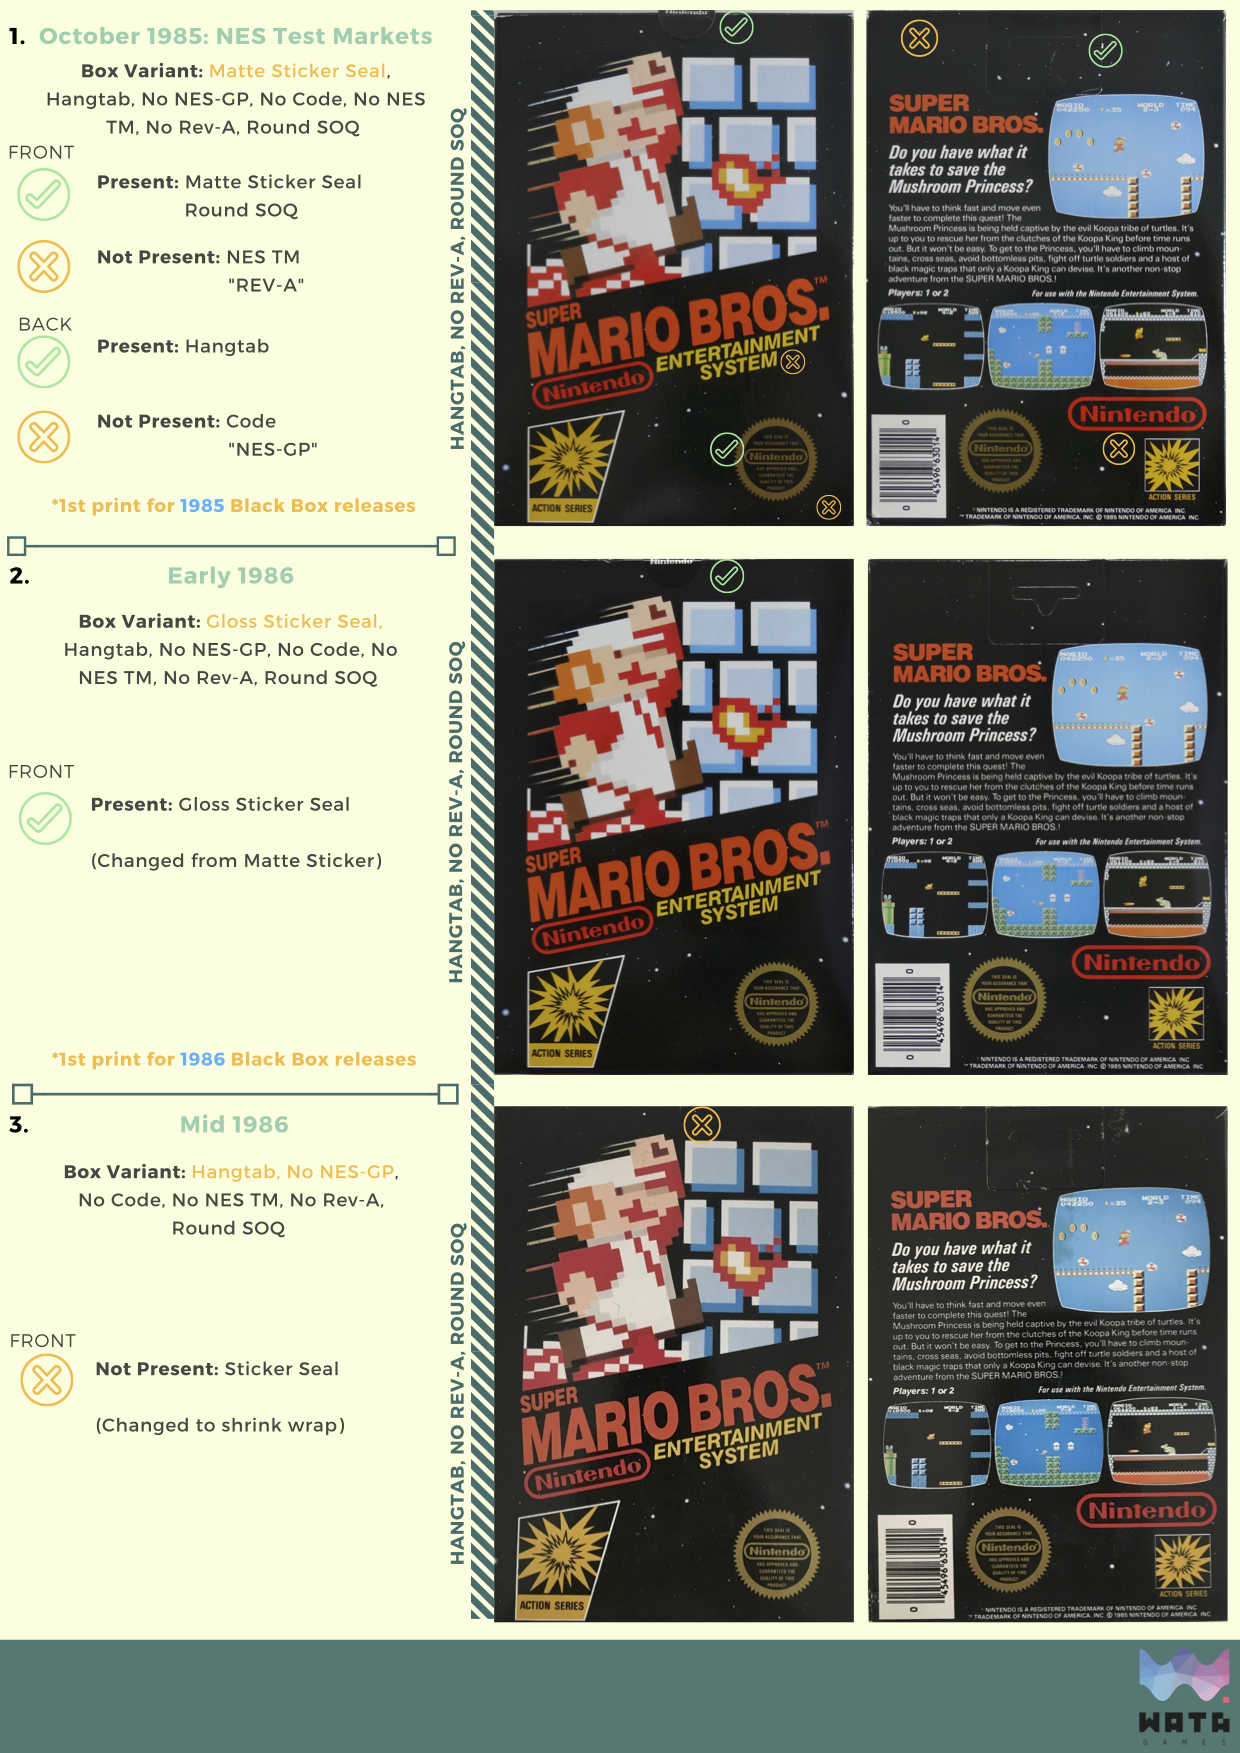 The Definitive NES Black Box Variant Guide – WATA Games